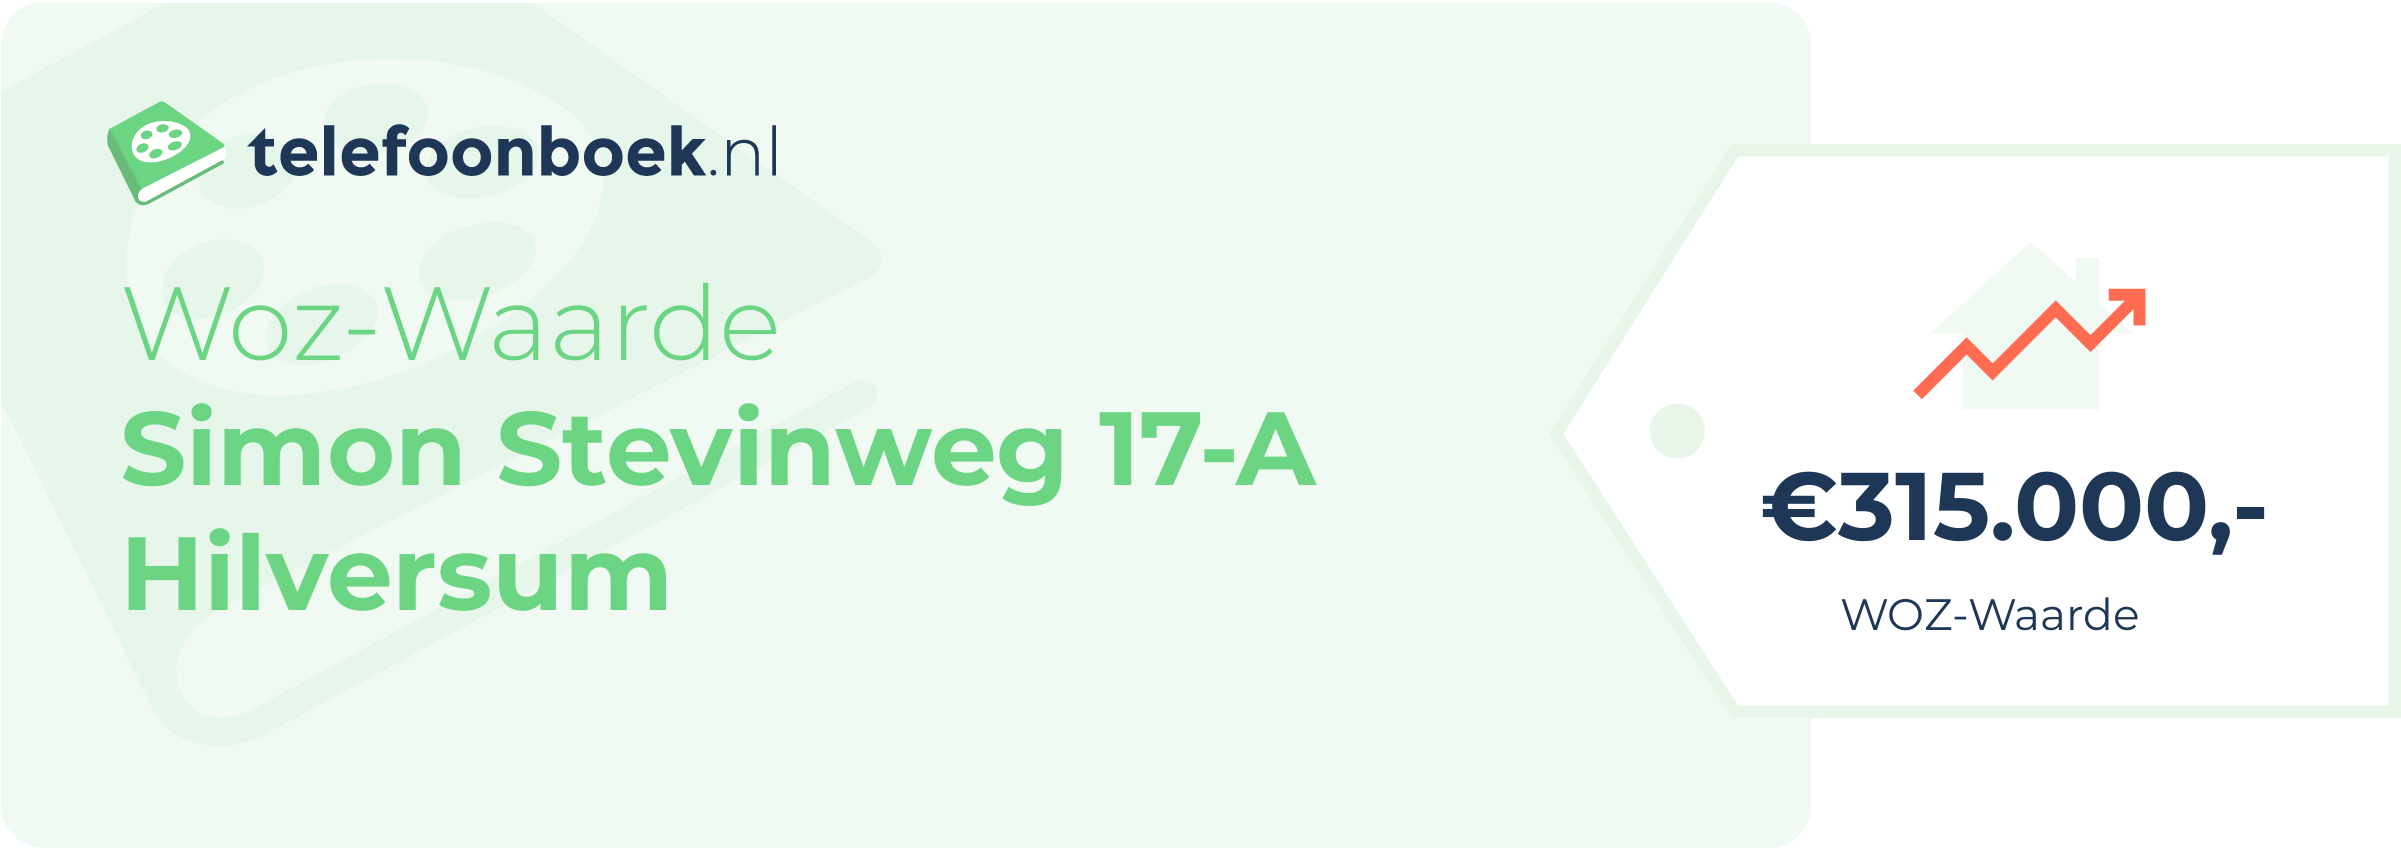 WOZ-waarde Simon Stevinweg 17-A Hilversum